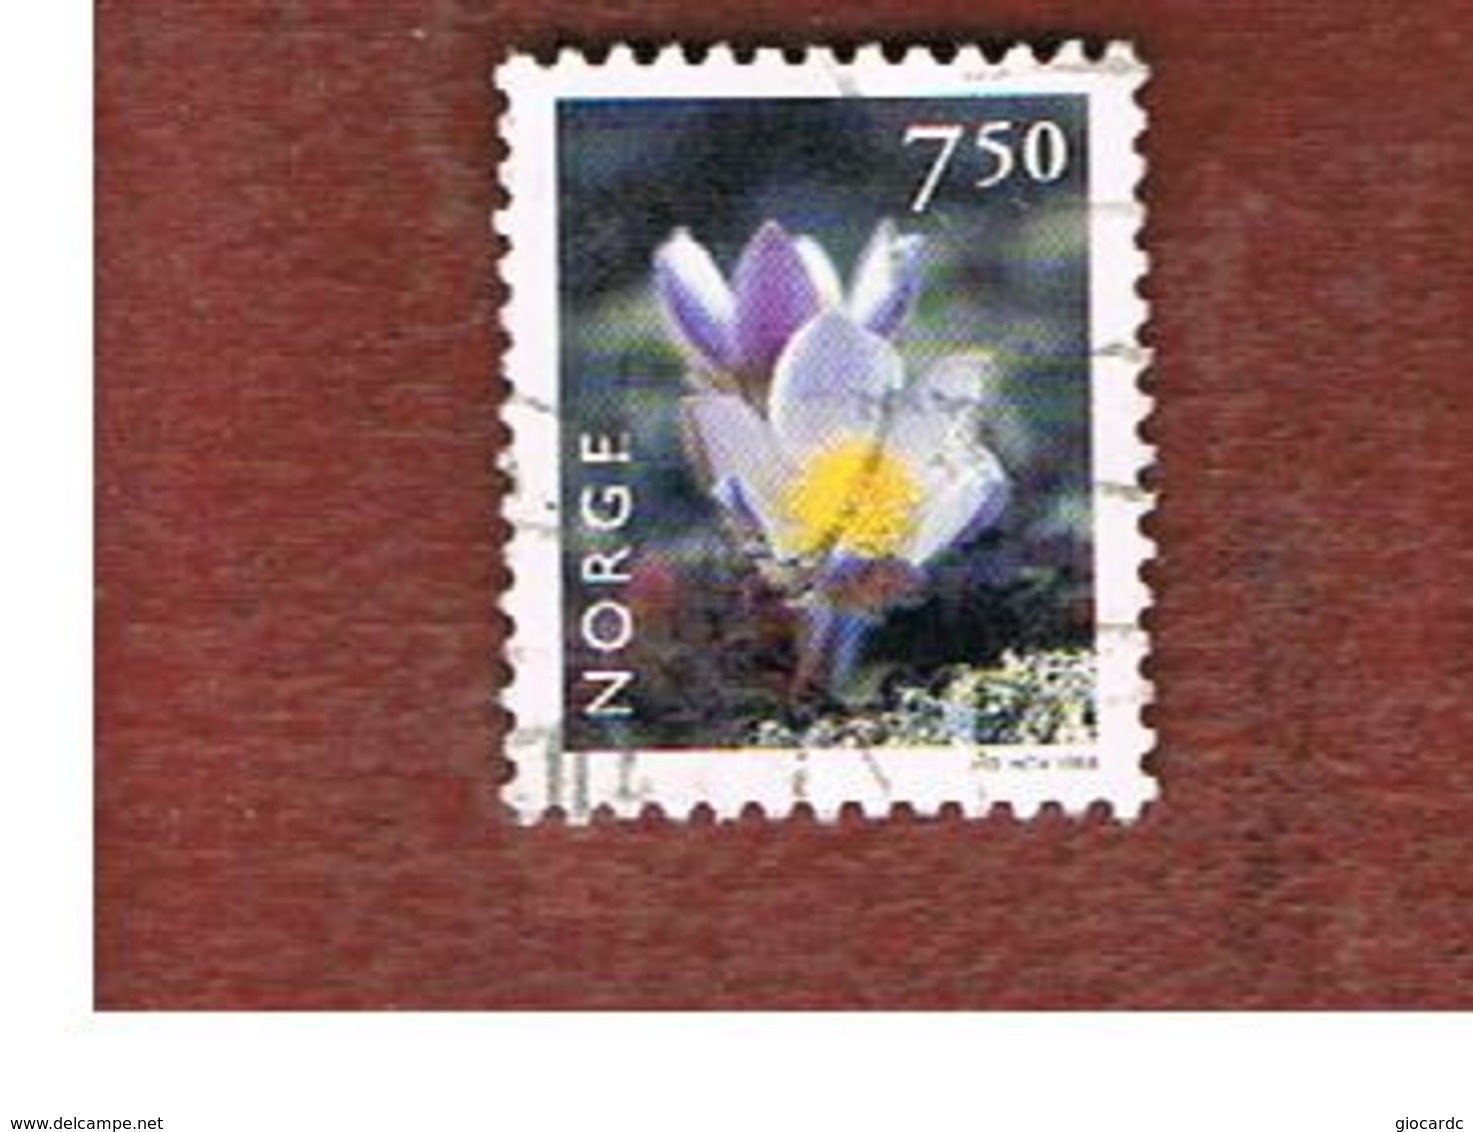 NORVEGIA (NORWAY) -   SG 1272   - 1998  FLOWERS:  PULSATILLA VULGARIS   7,50            - USED° - Oblitérés